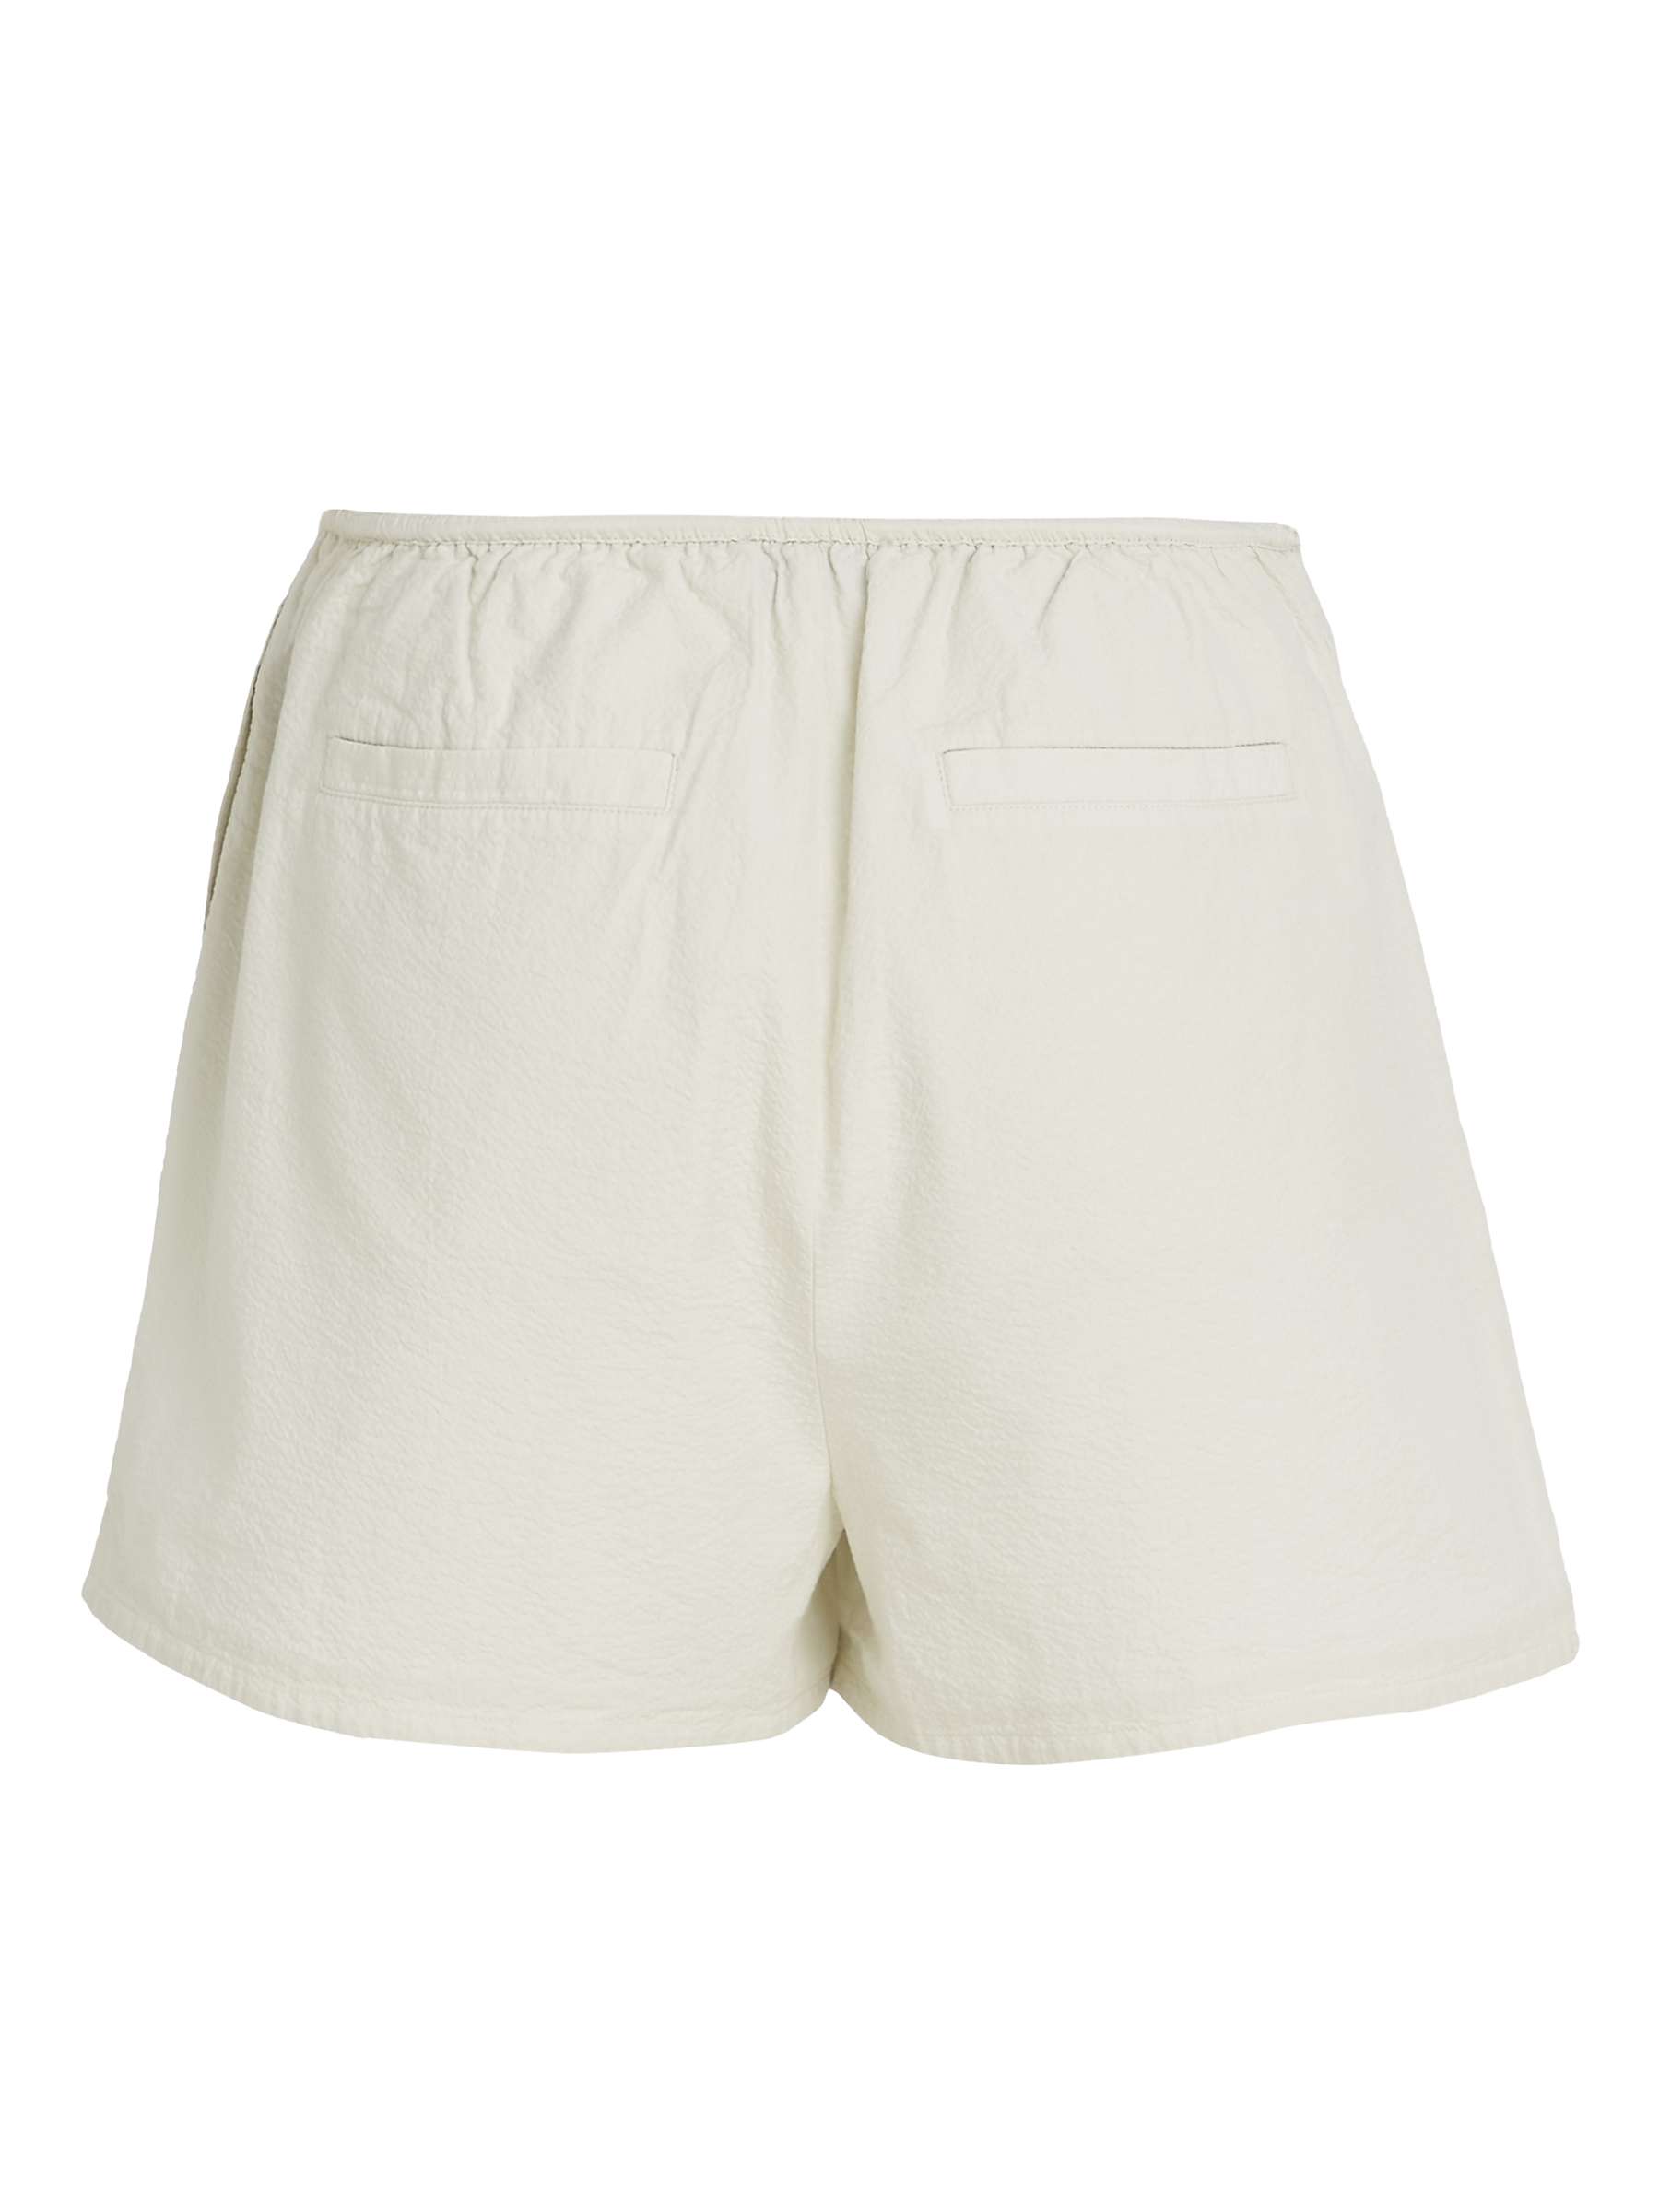 Buy Calvin Klein Seersucker Cotton Shorts, Icicle Online at johnlewis.com